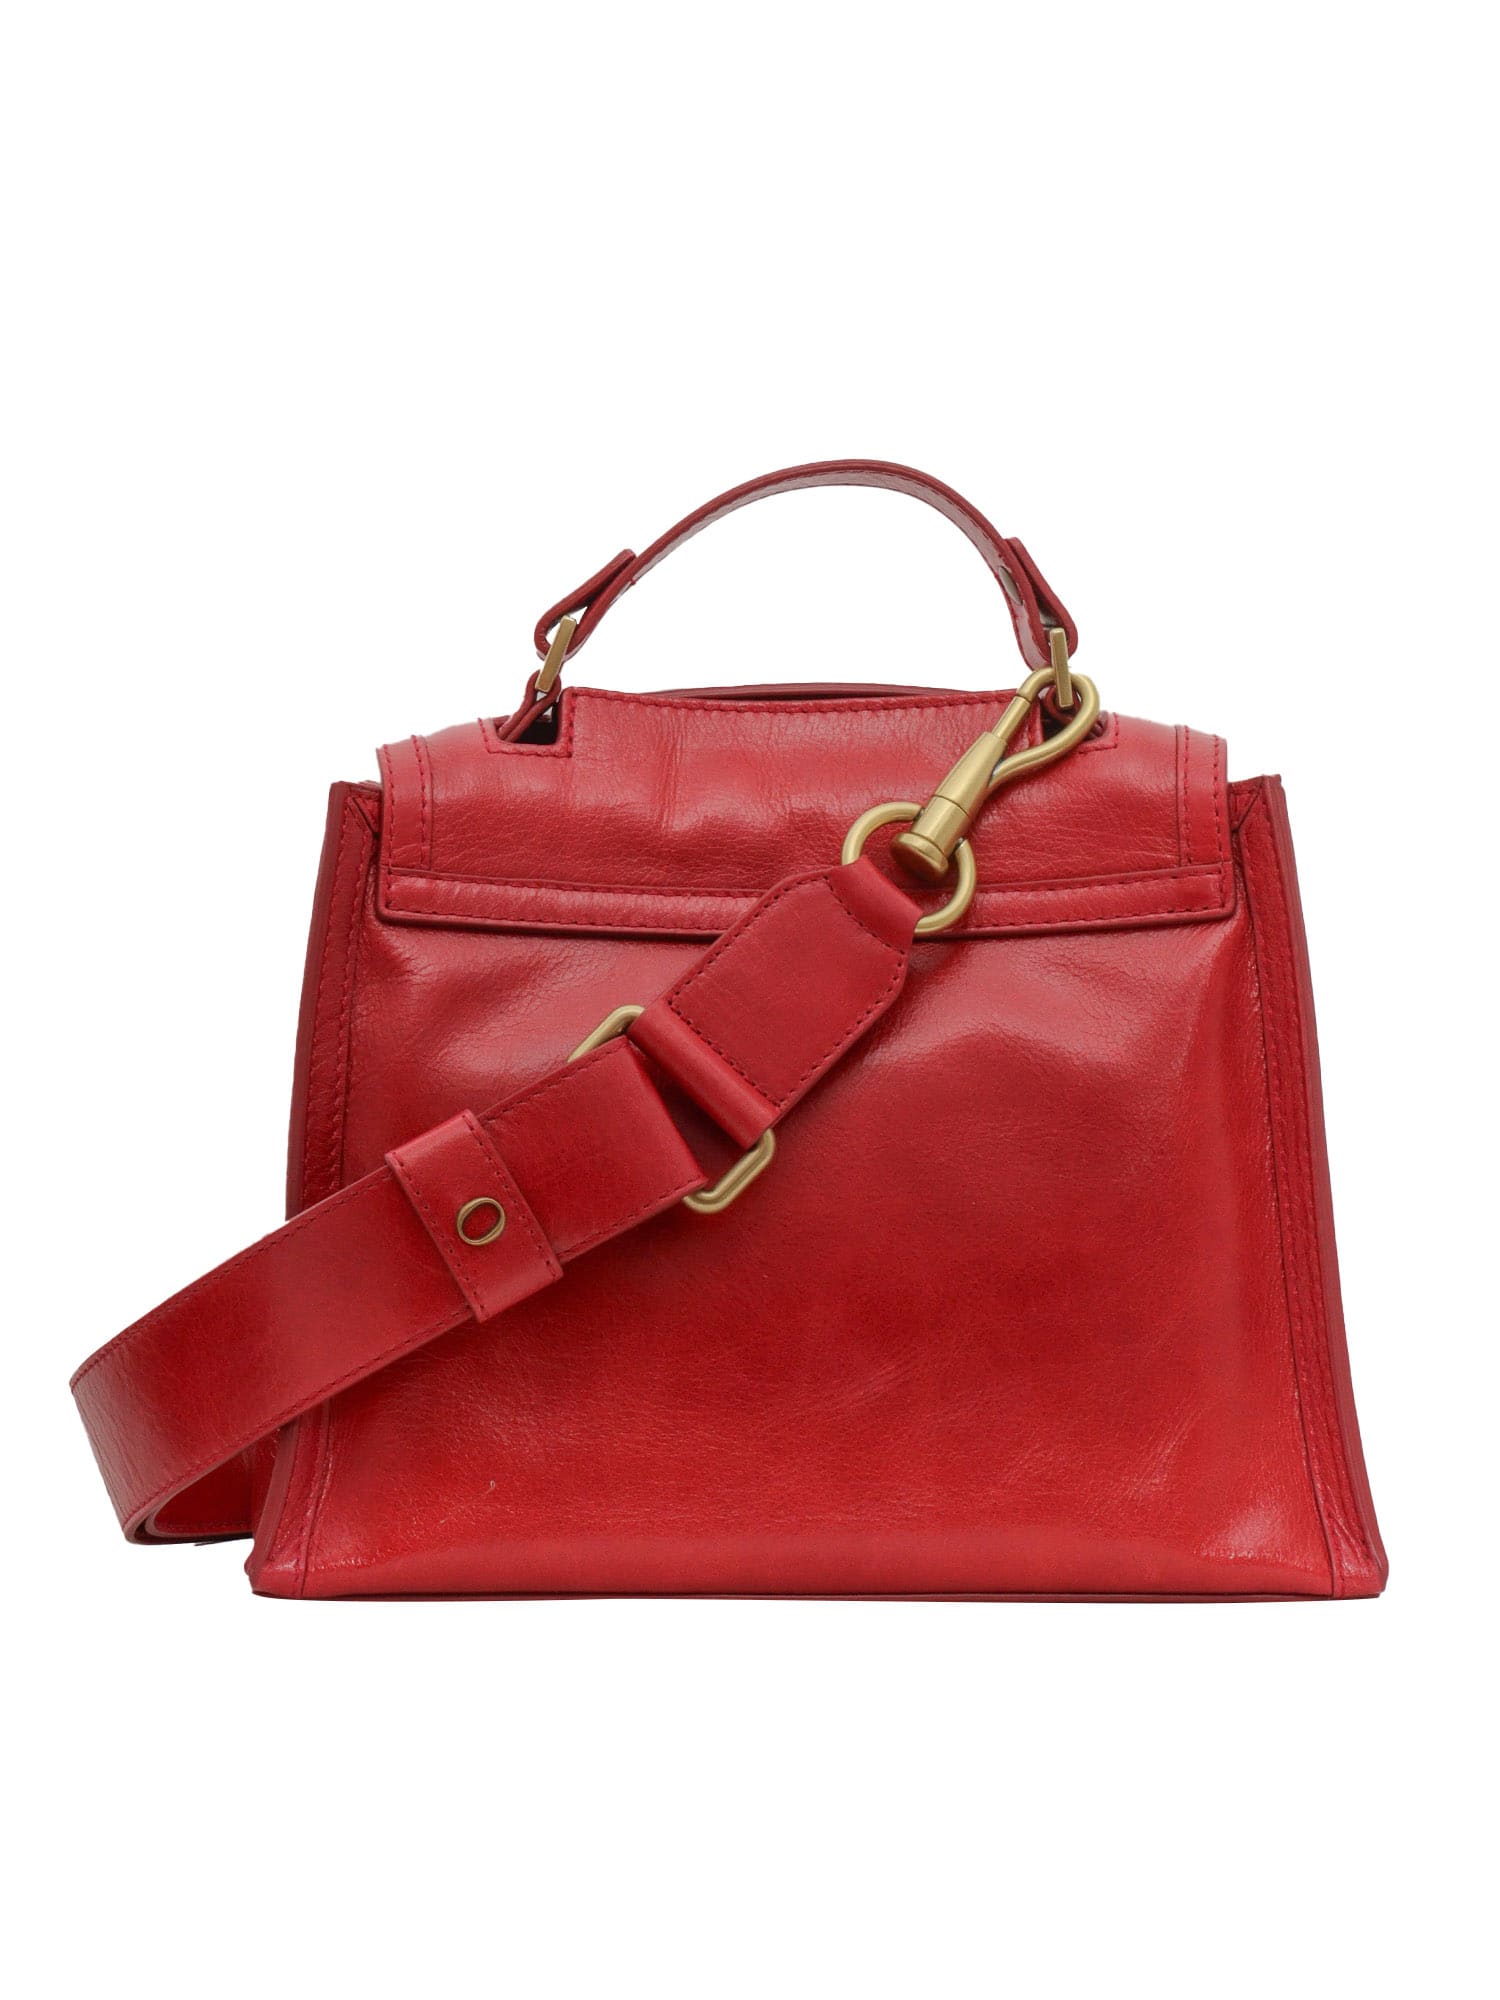 Shop Orciani Red Leather Handbag